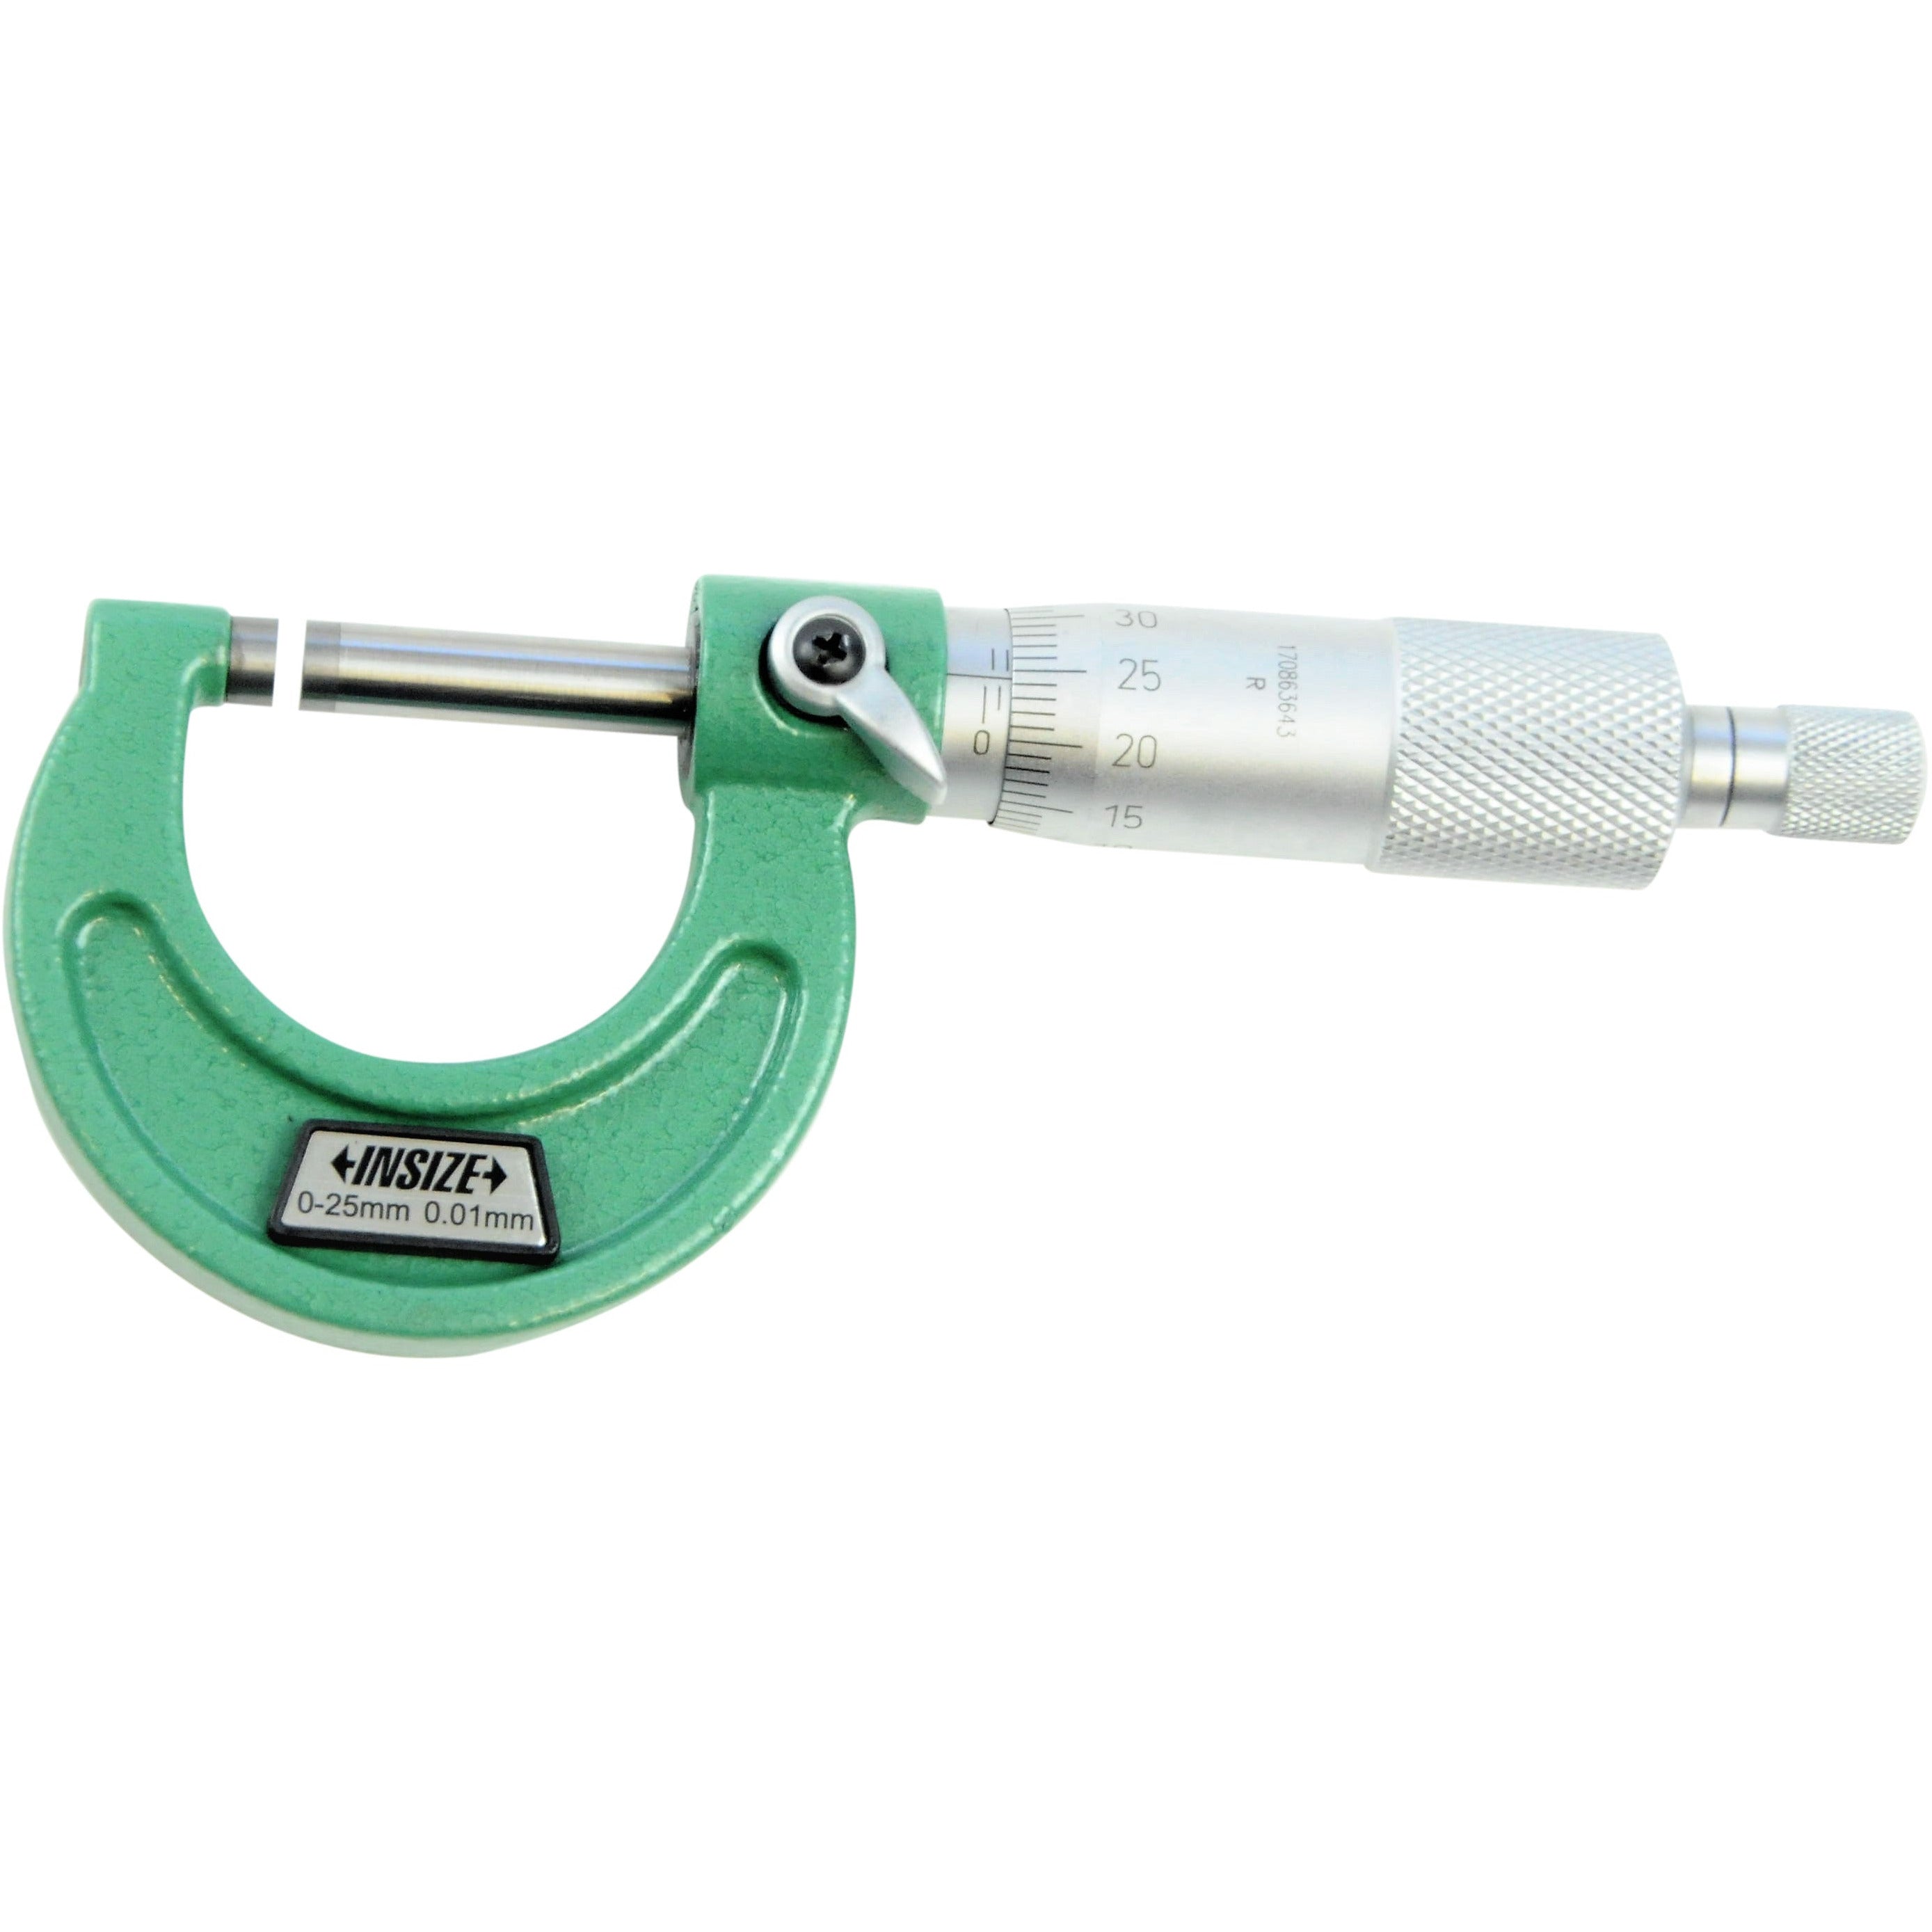 Insize Outside Micrometer Set 0 - 150mm x 0.01mm Range Series 3203-1506A